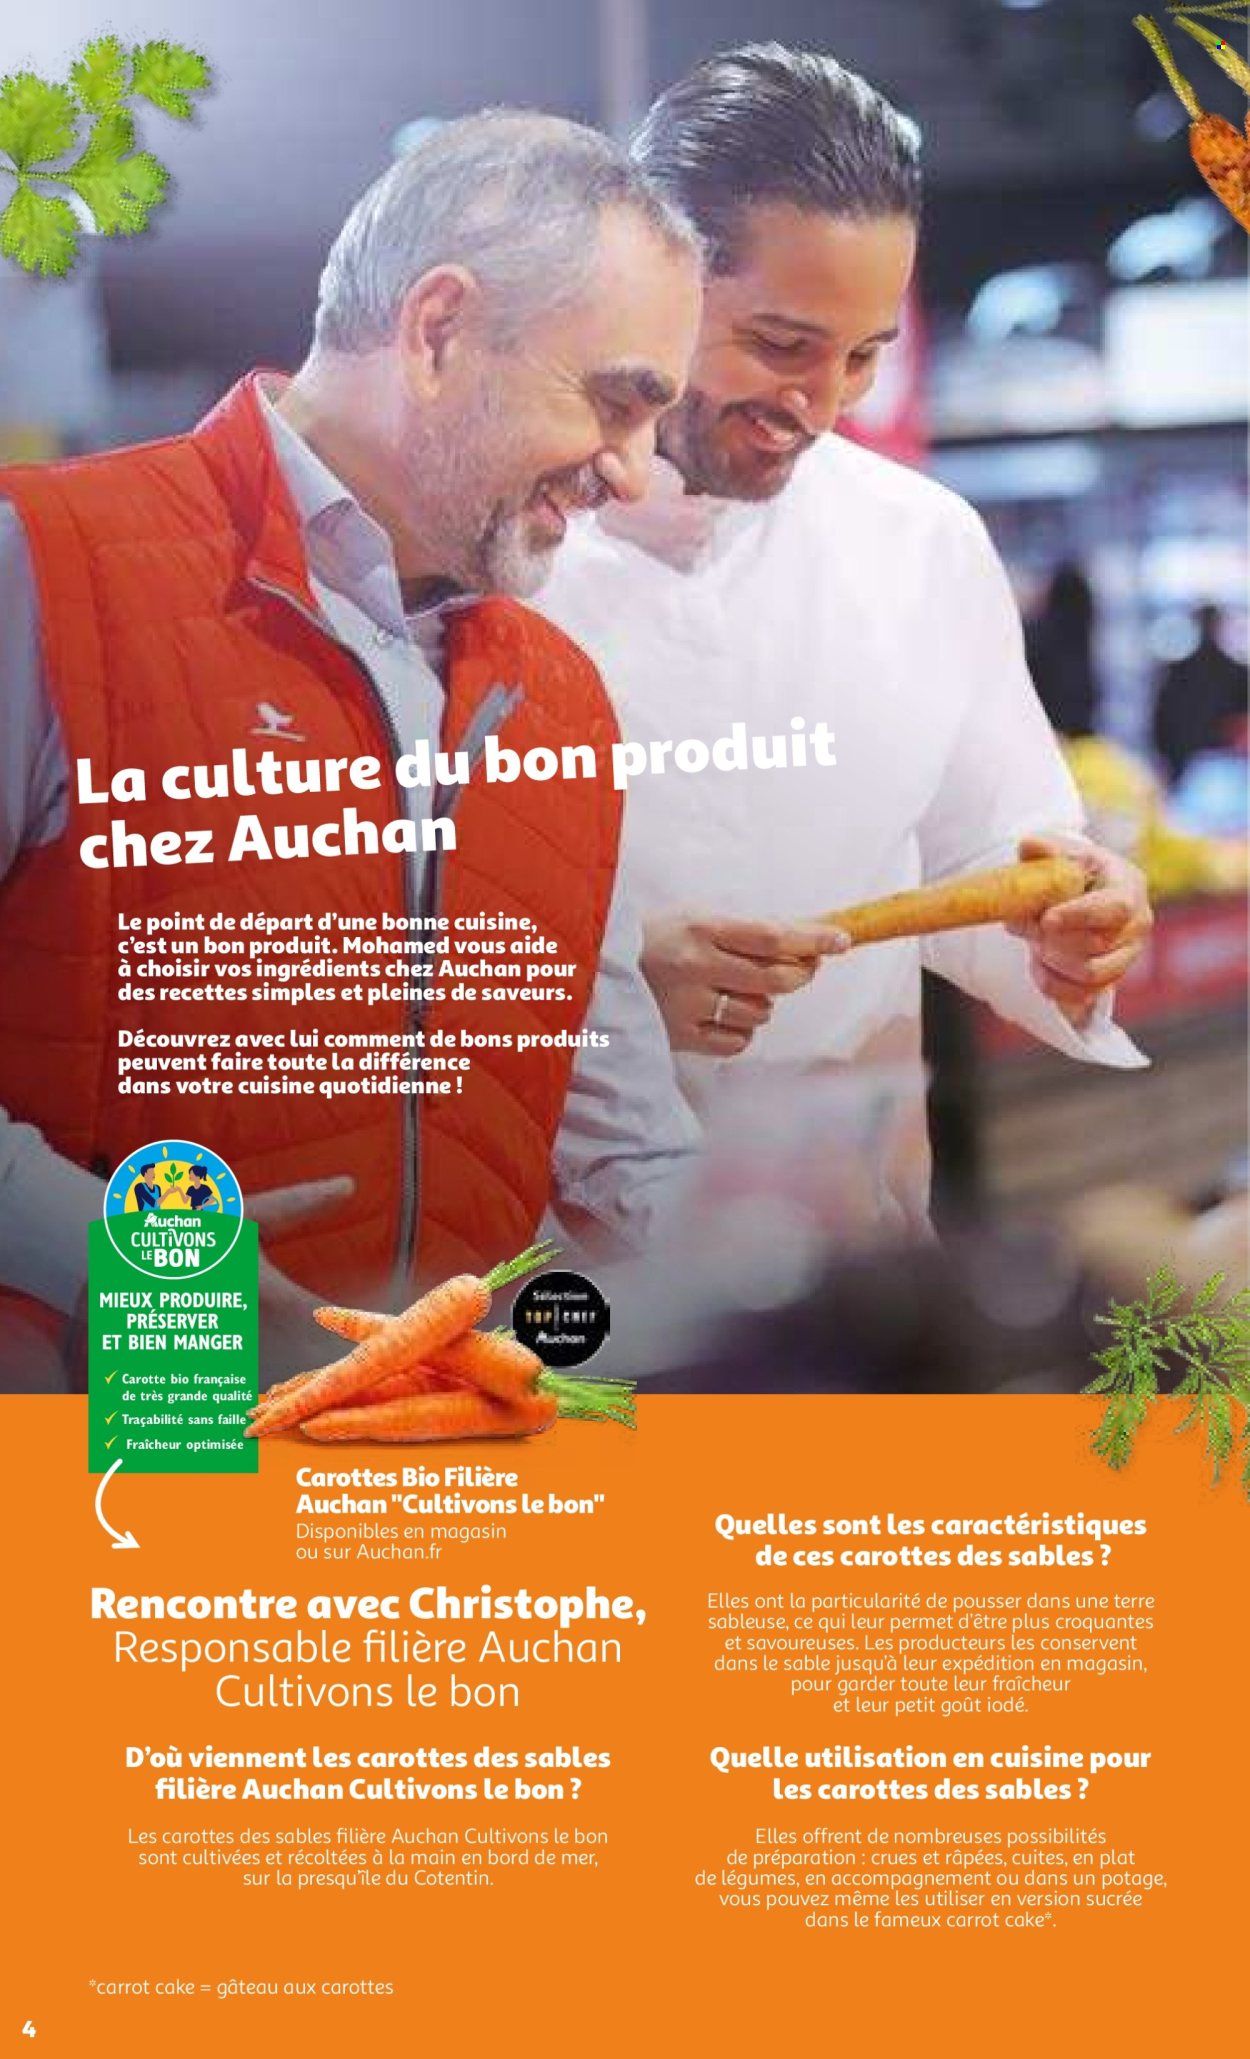 Catalogue Auchan. 